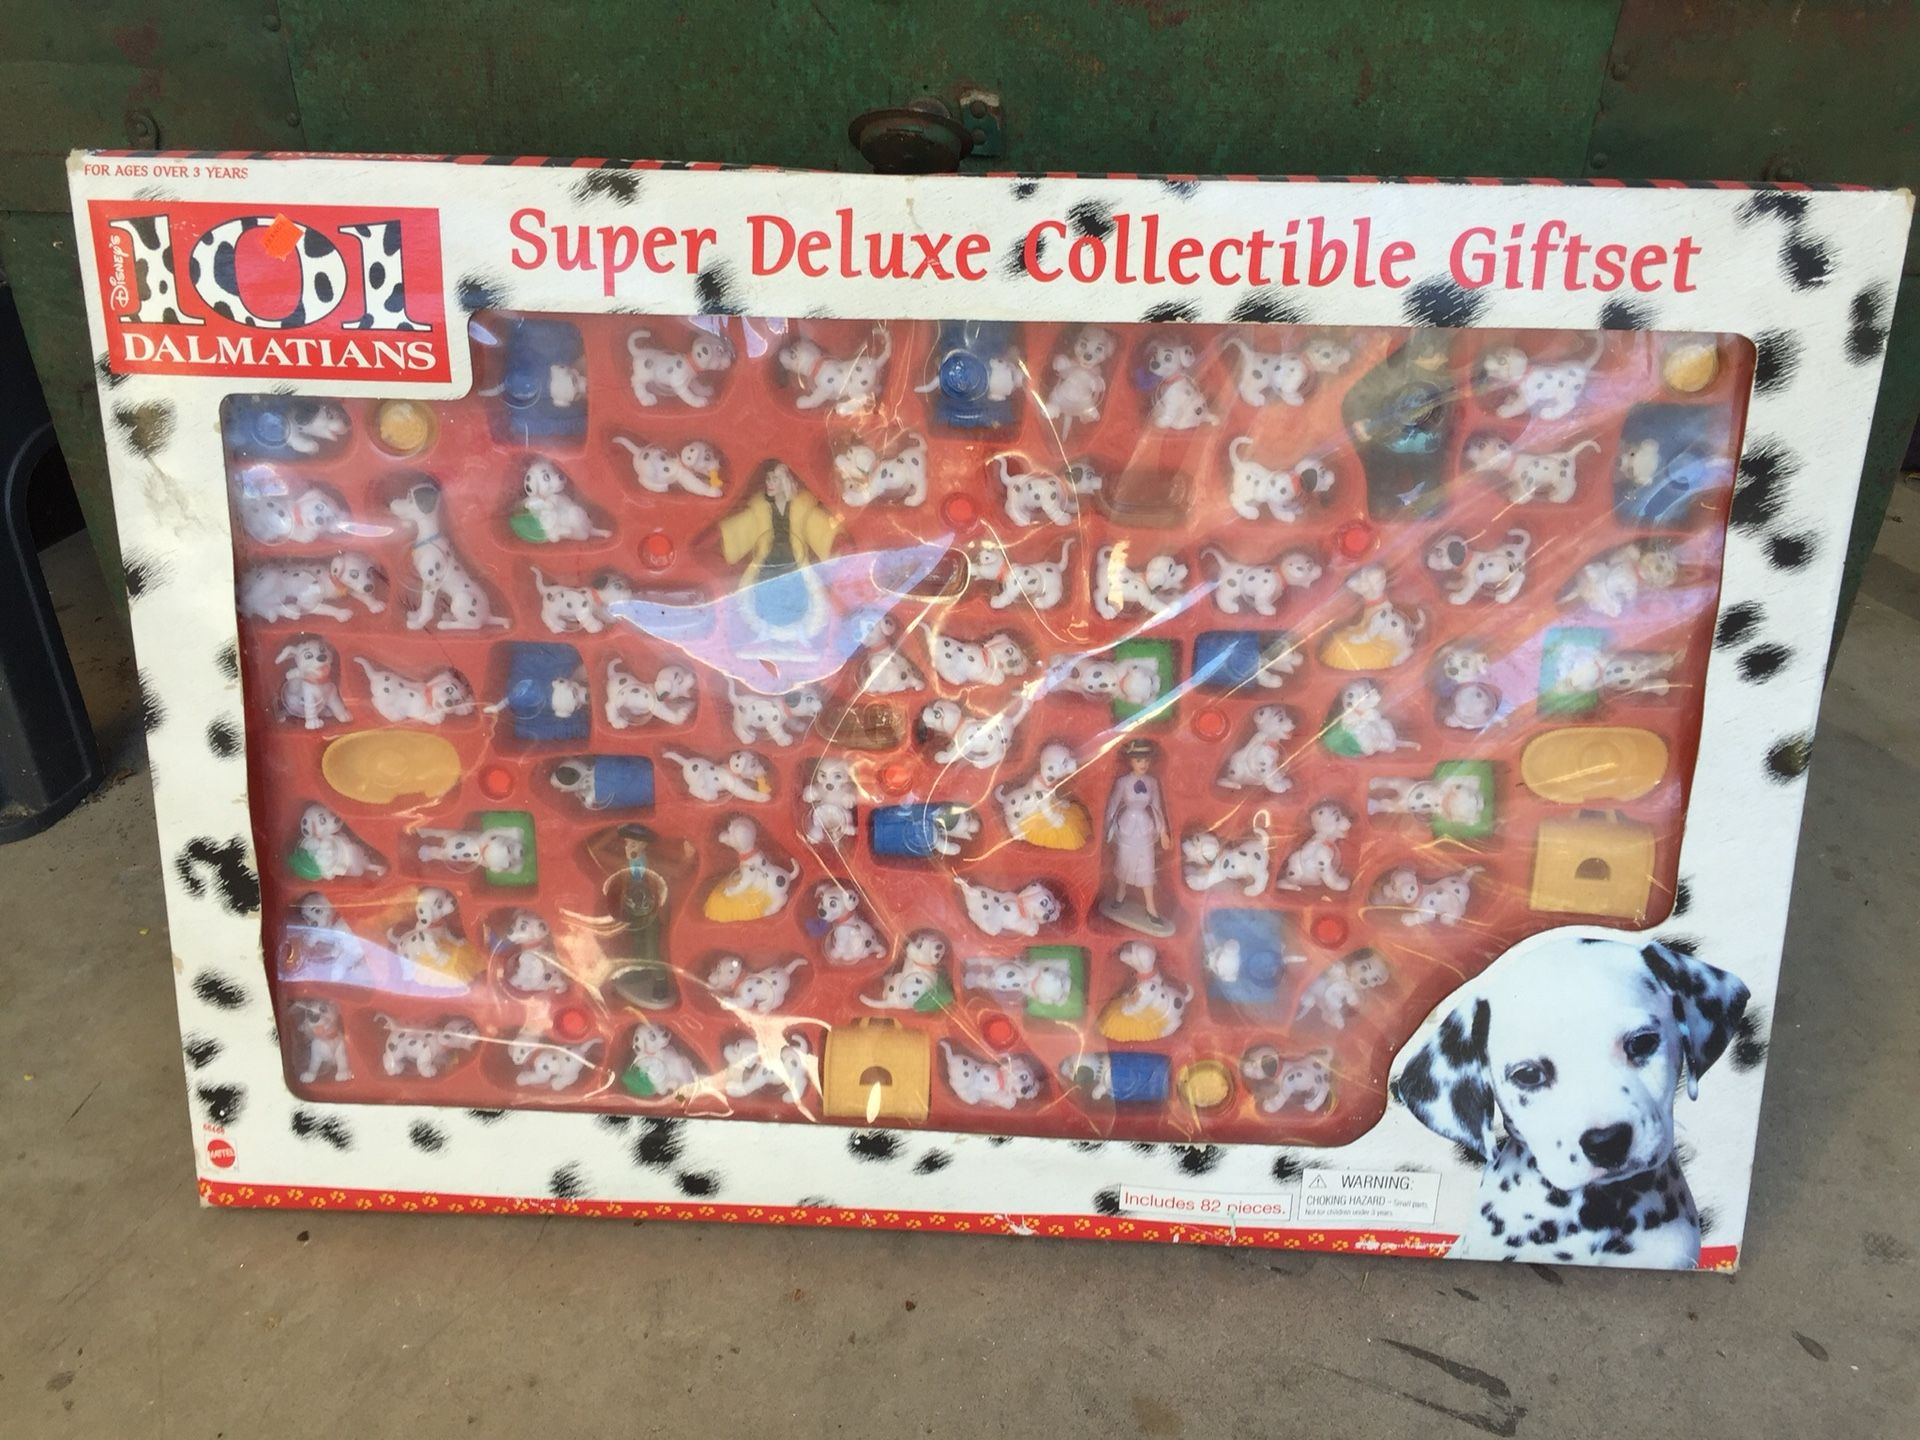 101 Dalmatians Figures - Gift set - Mattel Toys